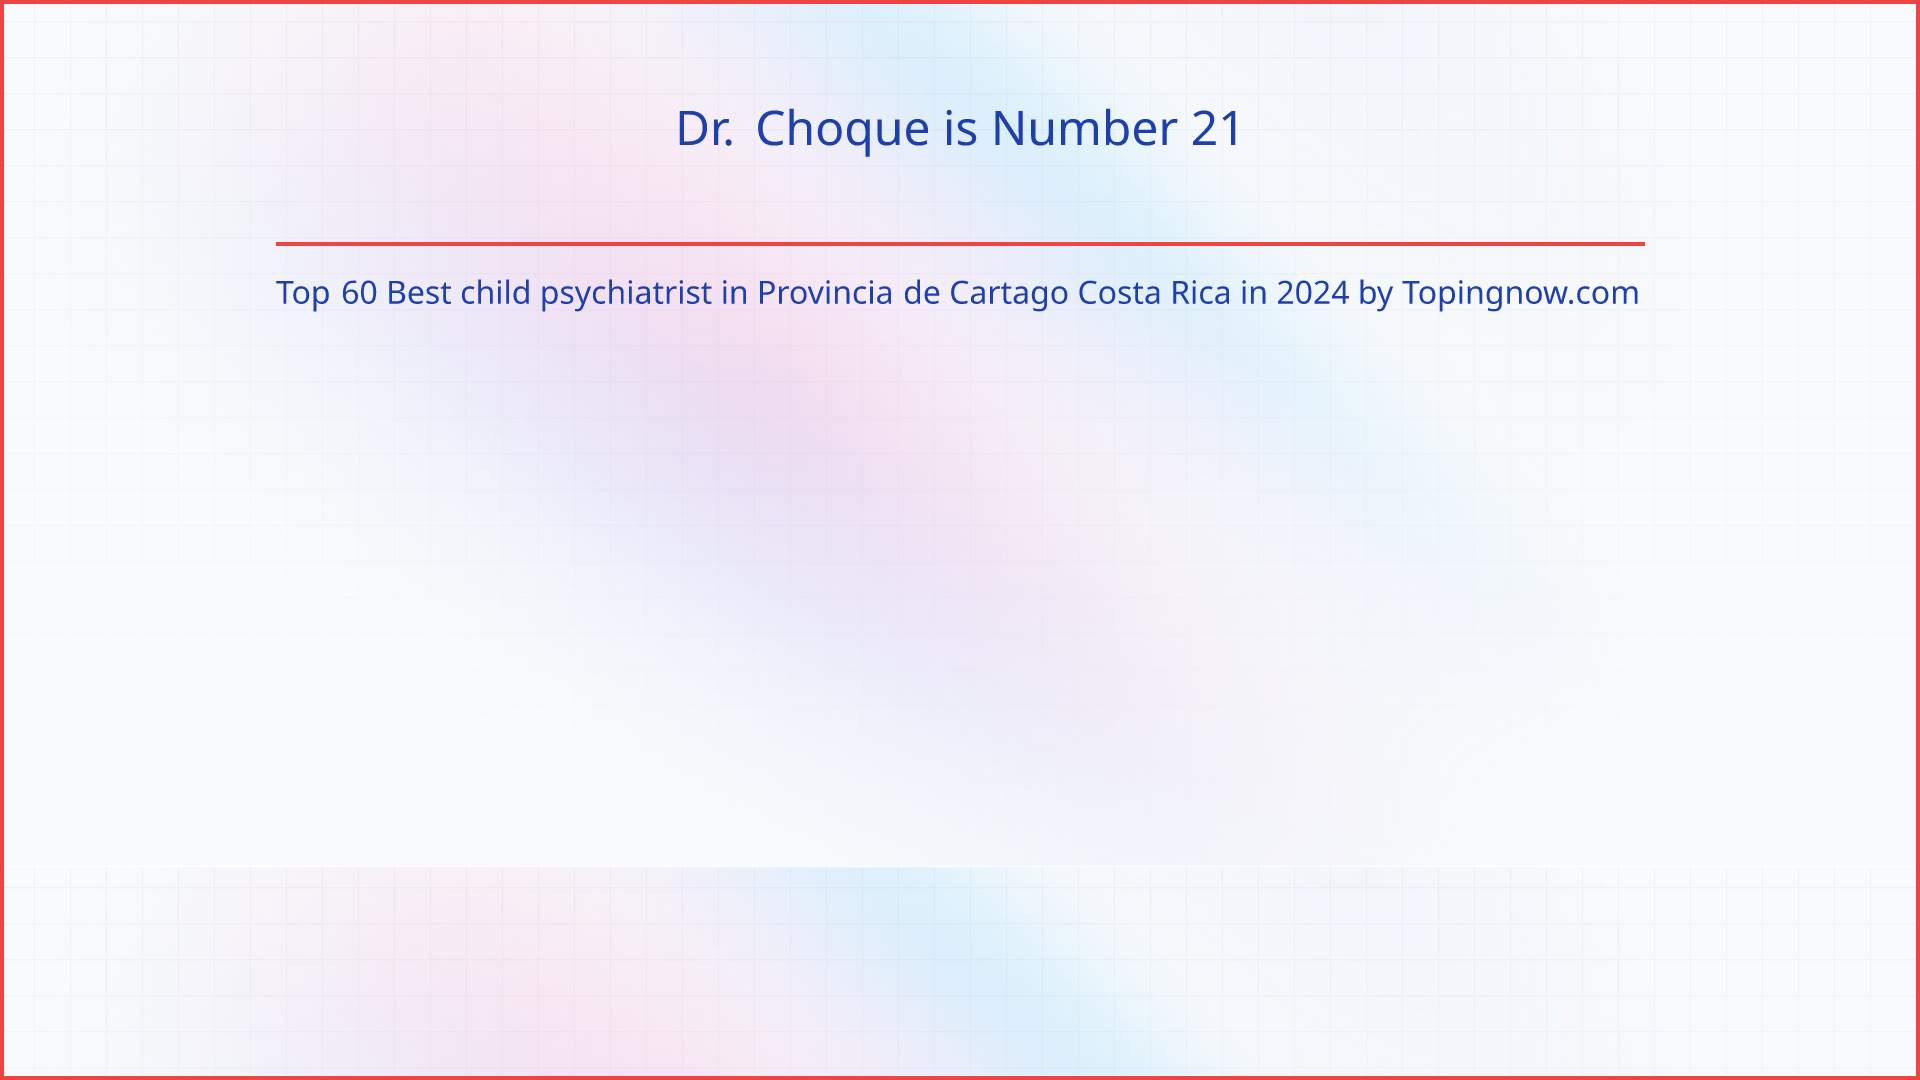 Dr. Choque: Top 60 Best child psychiatrist in Provincia de Cartago Costa Rica in 2024